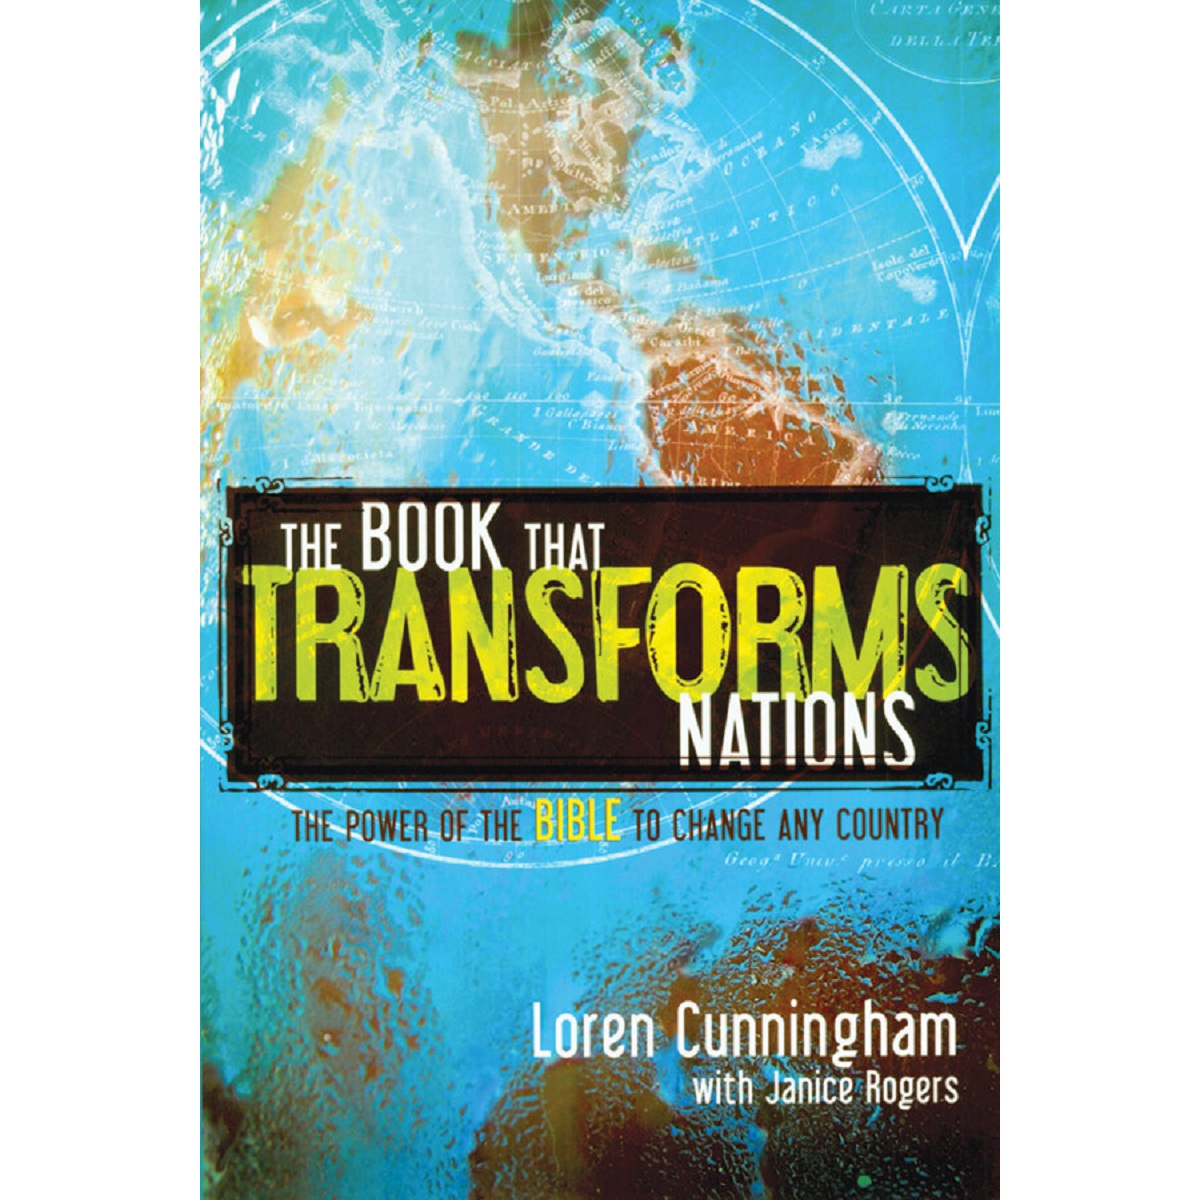 https://www.tarbiyahbooksplus.com/shop/christian-books/christian-living-christian-books/the-book-that-transforms-nations/